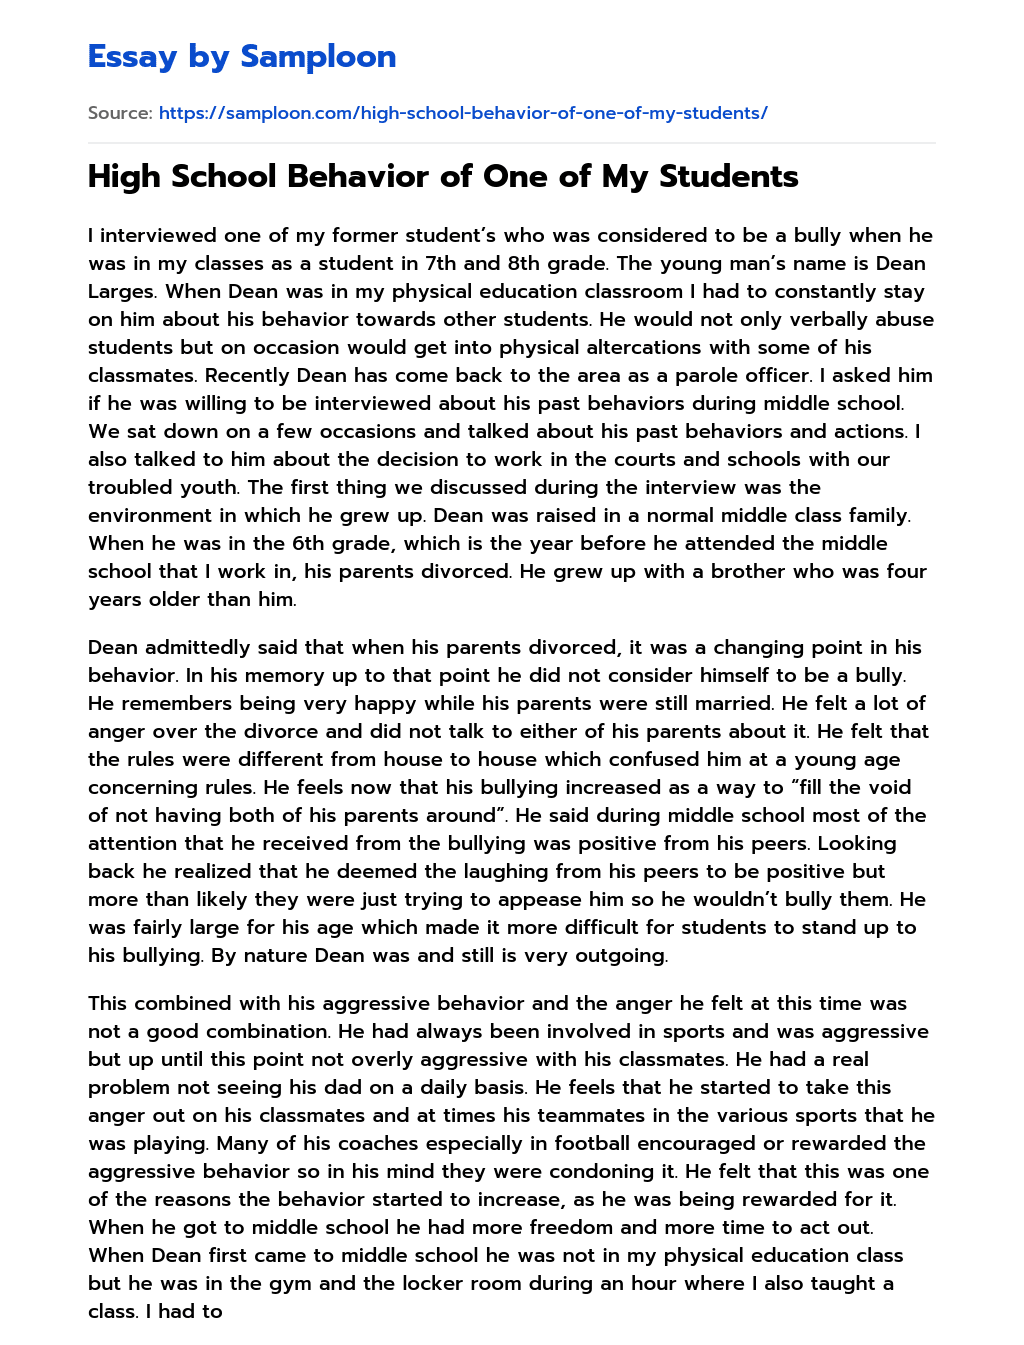 High School Behavior of One of My Students essay